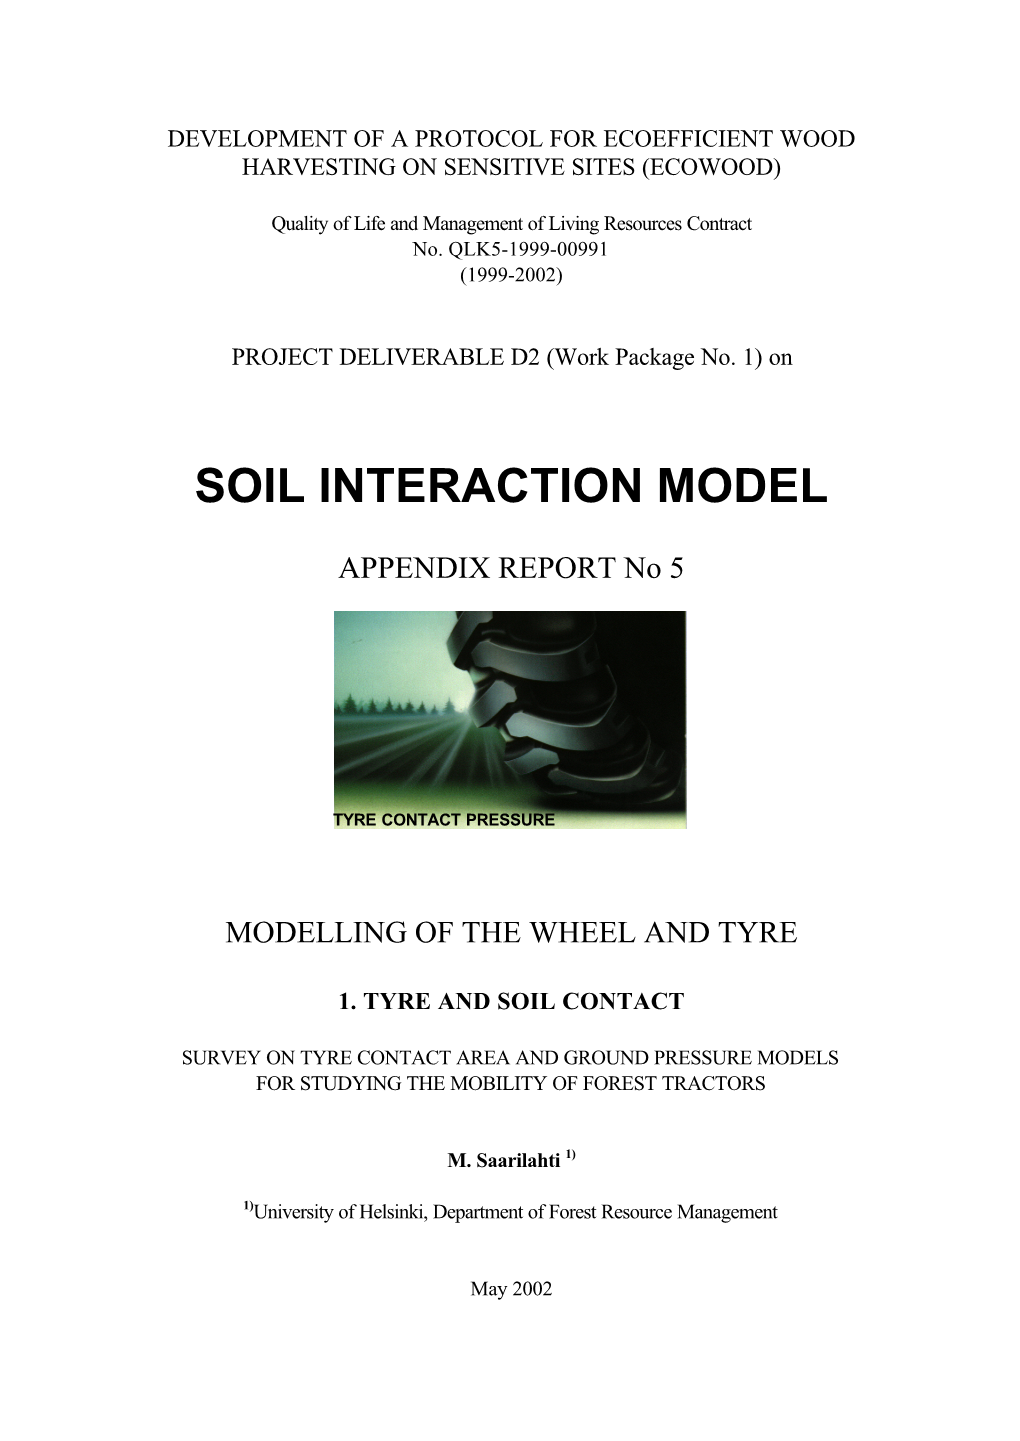 Soil Interaction Model